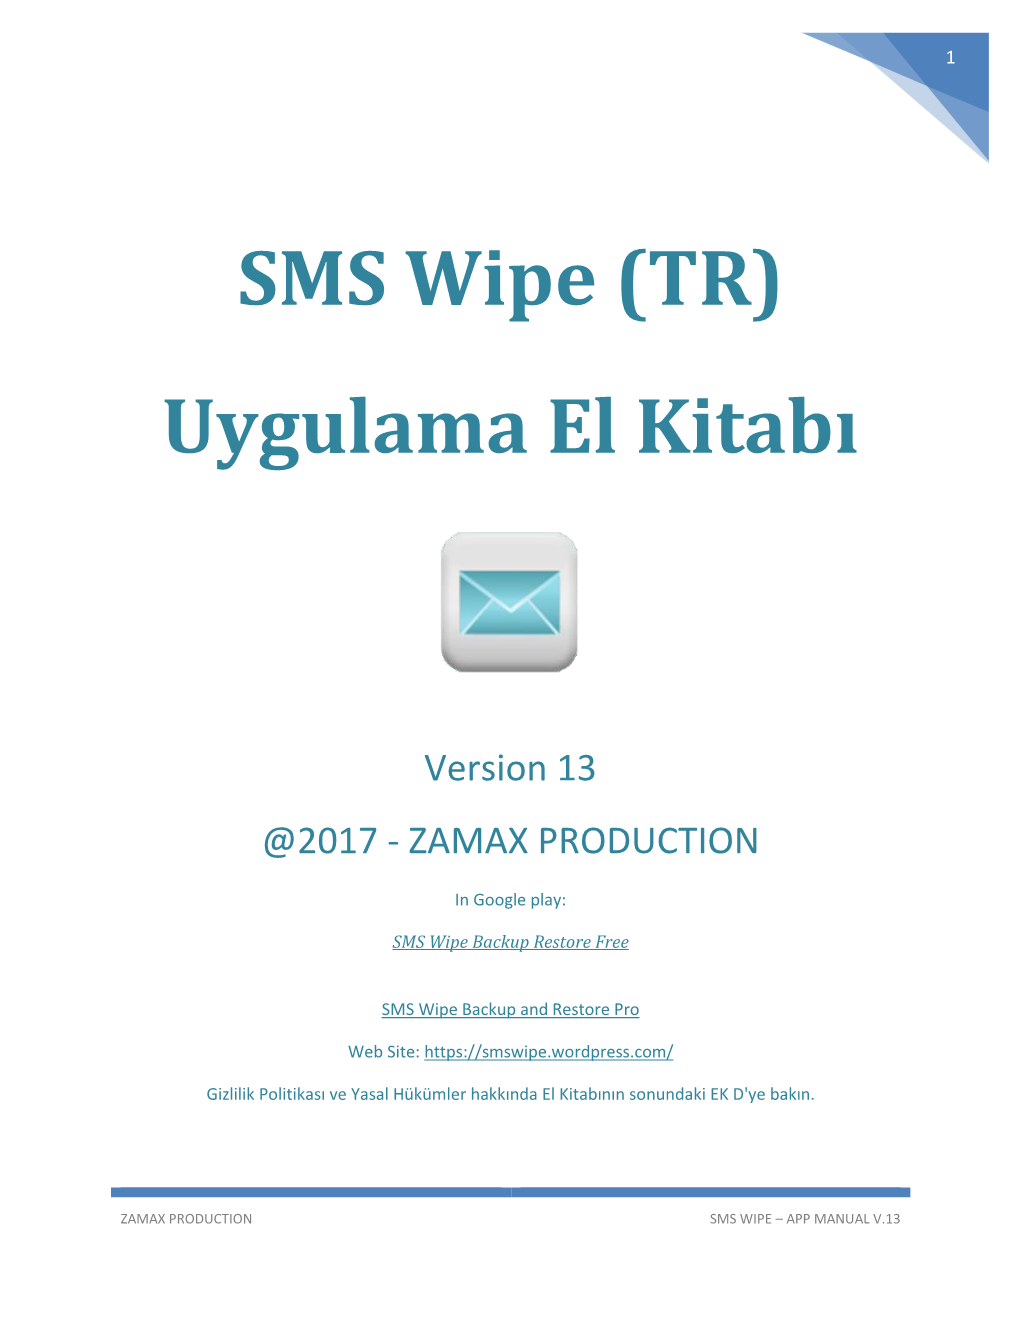 SMS Wipe (TR) Uygulama El Kitabı